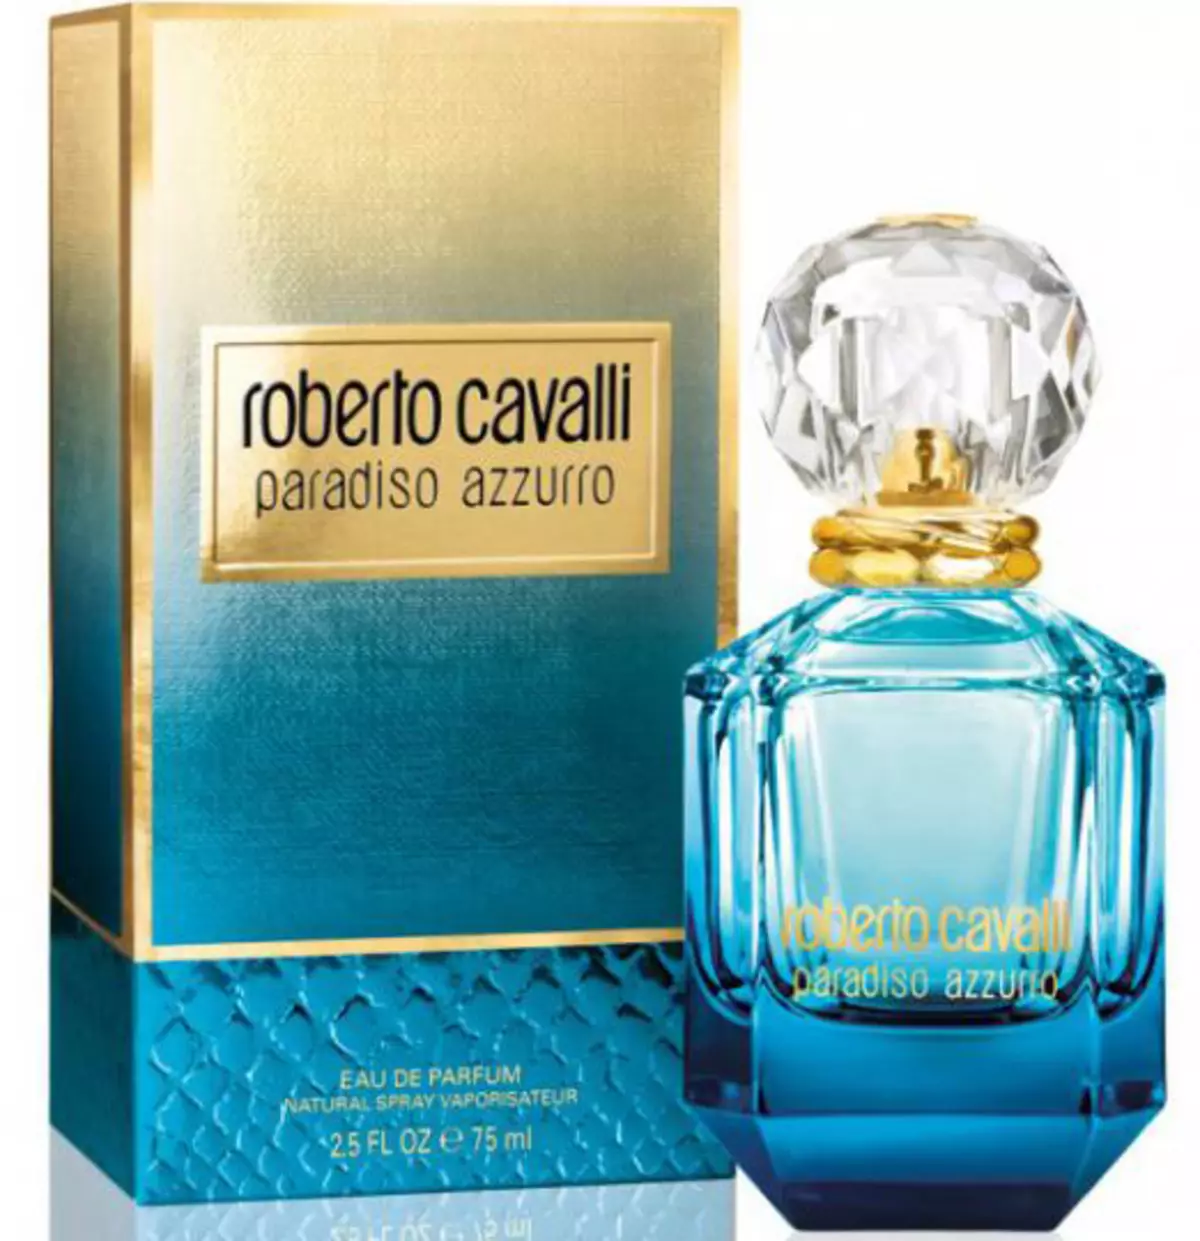 Perfume Roberto Cavalli: Perfume das Mulheres, Apenas Cavalli e outros Toilette Water, Aromas Roberto Cavalli Eau de Parfum, Paradiso e Acqua 25296_14